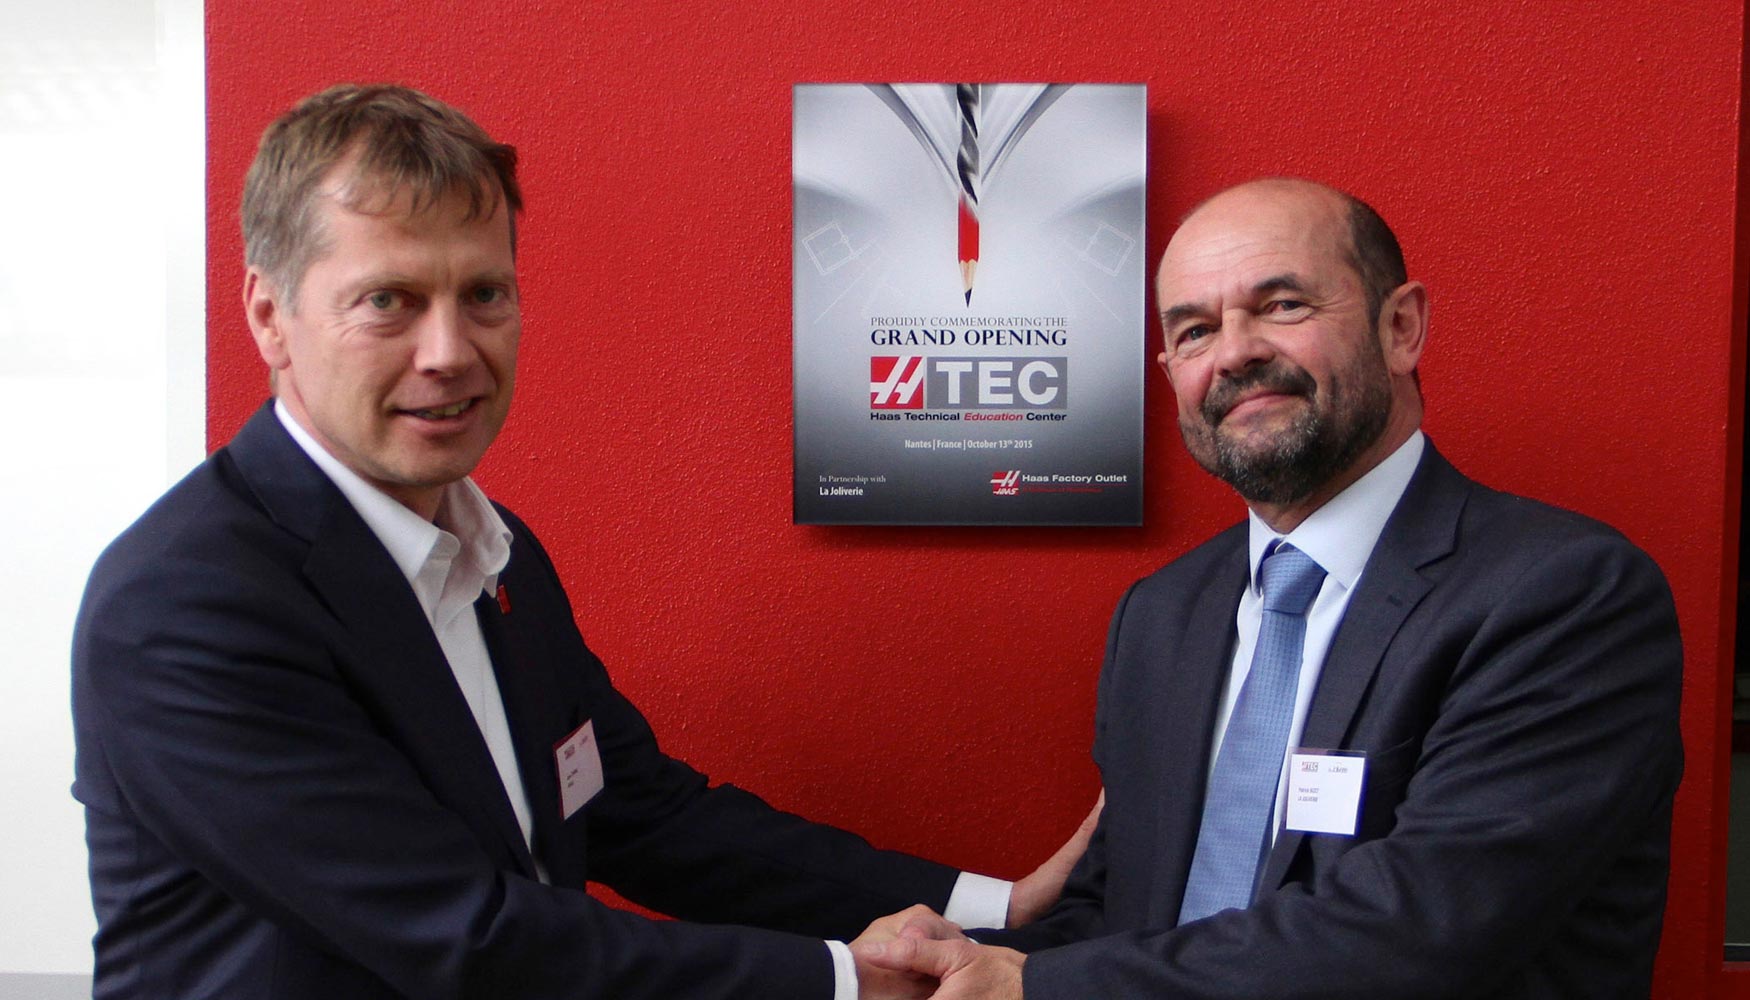 A la izq., Jens Thing, Managing Director de Haas Automation Europe, junto a Patrick Bizet, dcha...